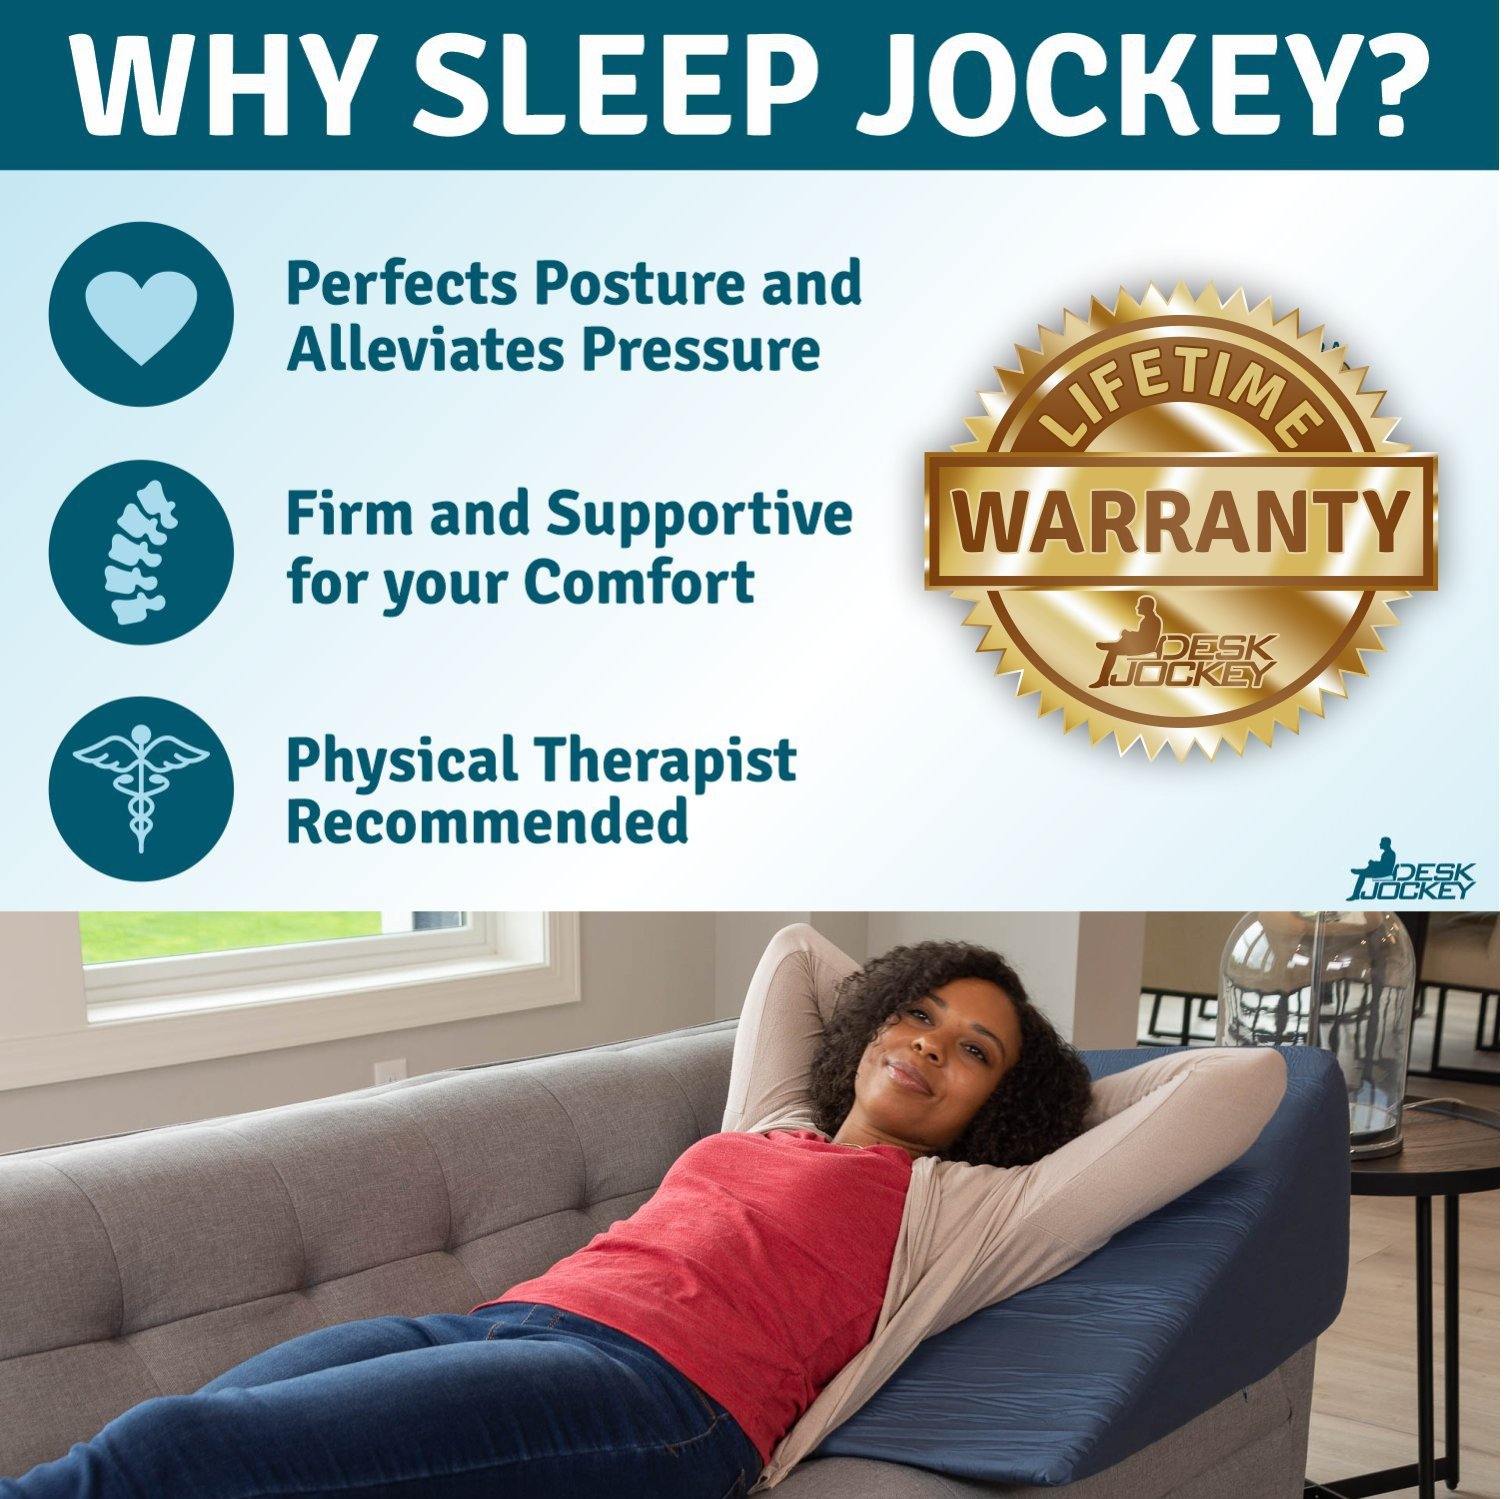 Bodyform® Orthopedic Neck Support Pillow 